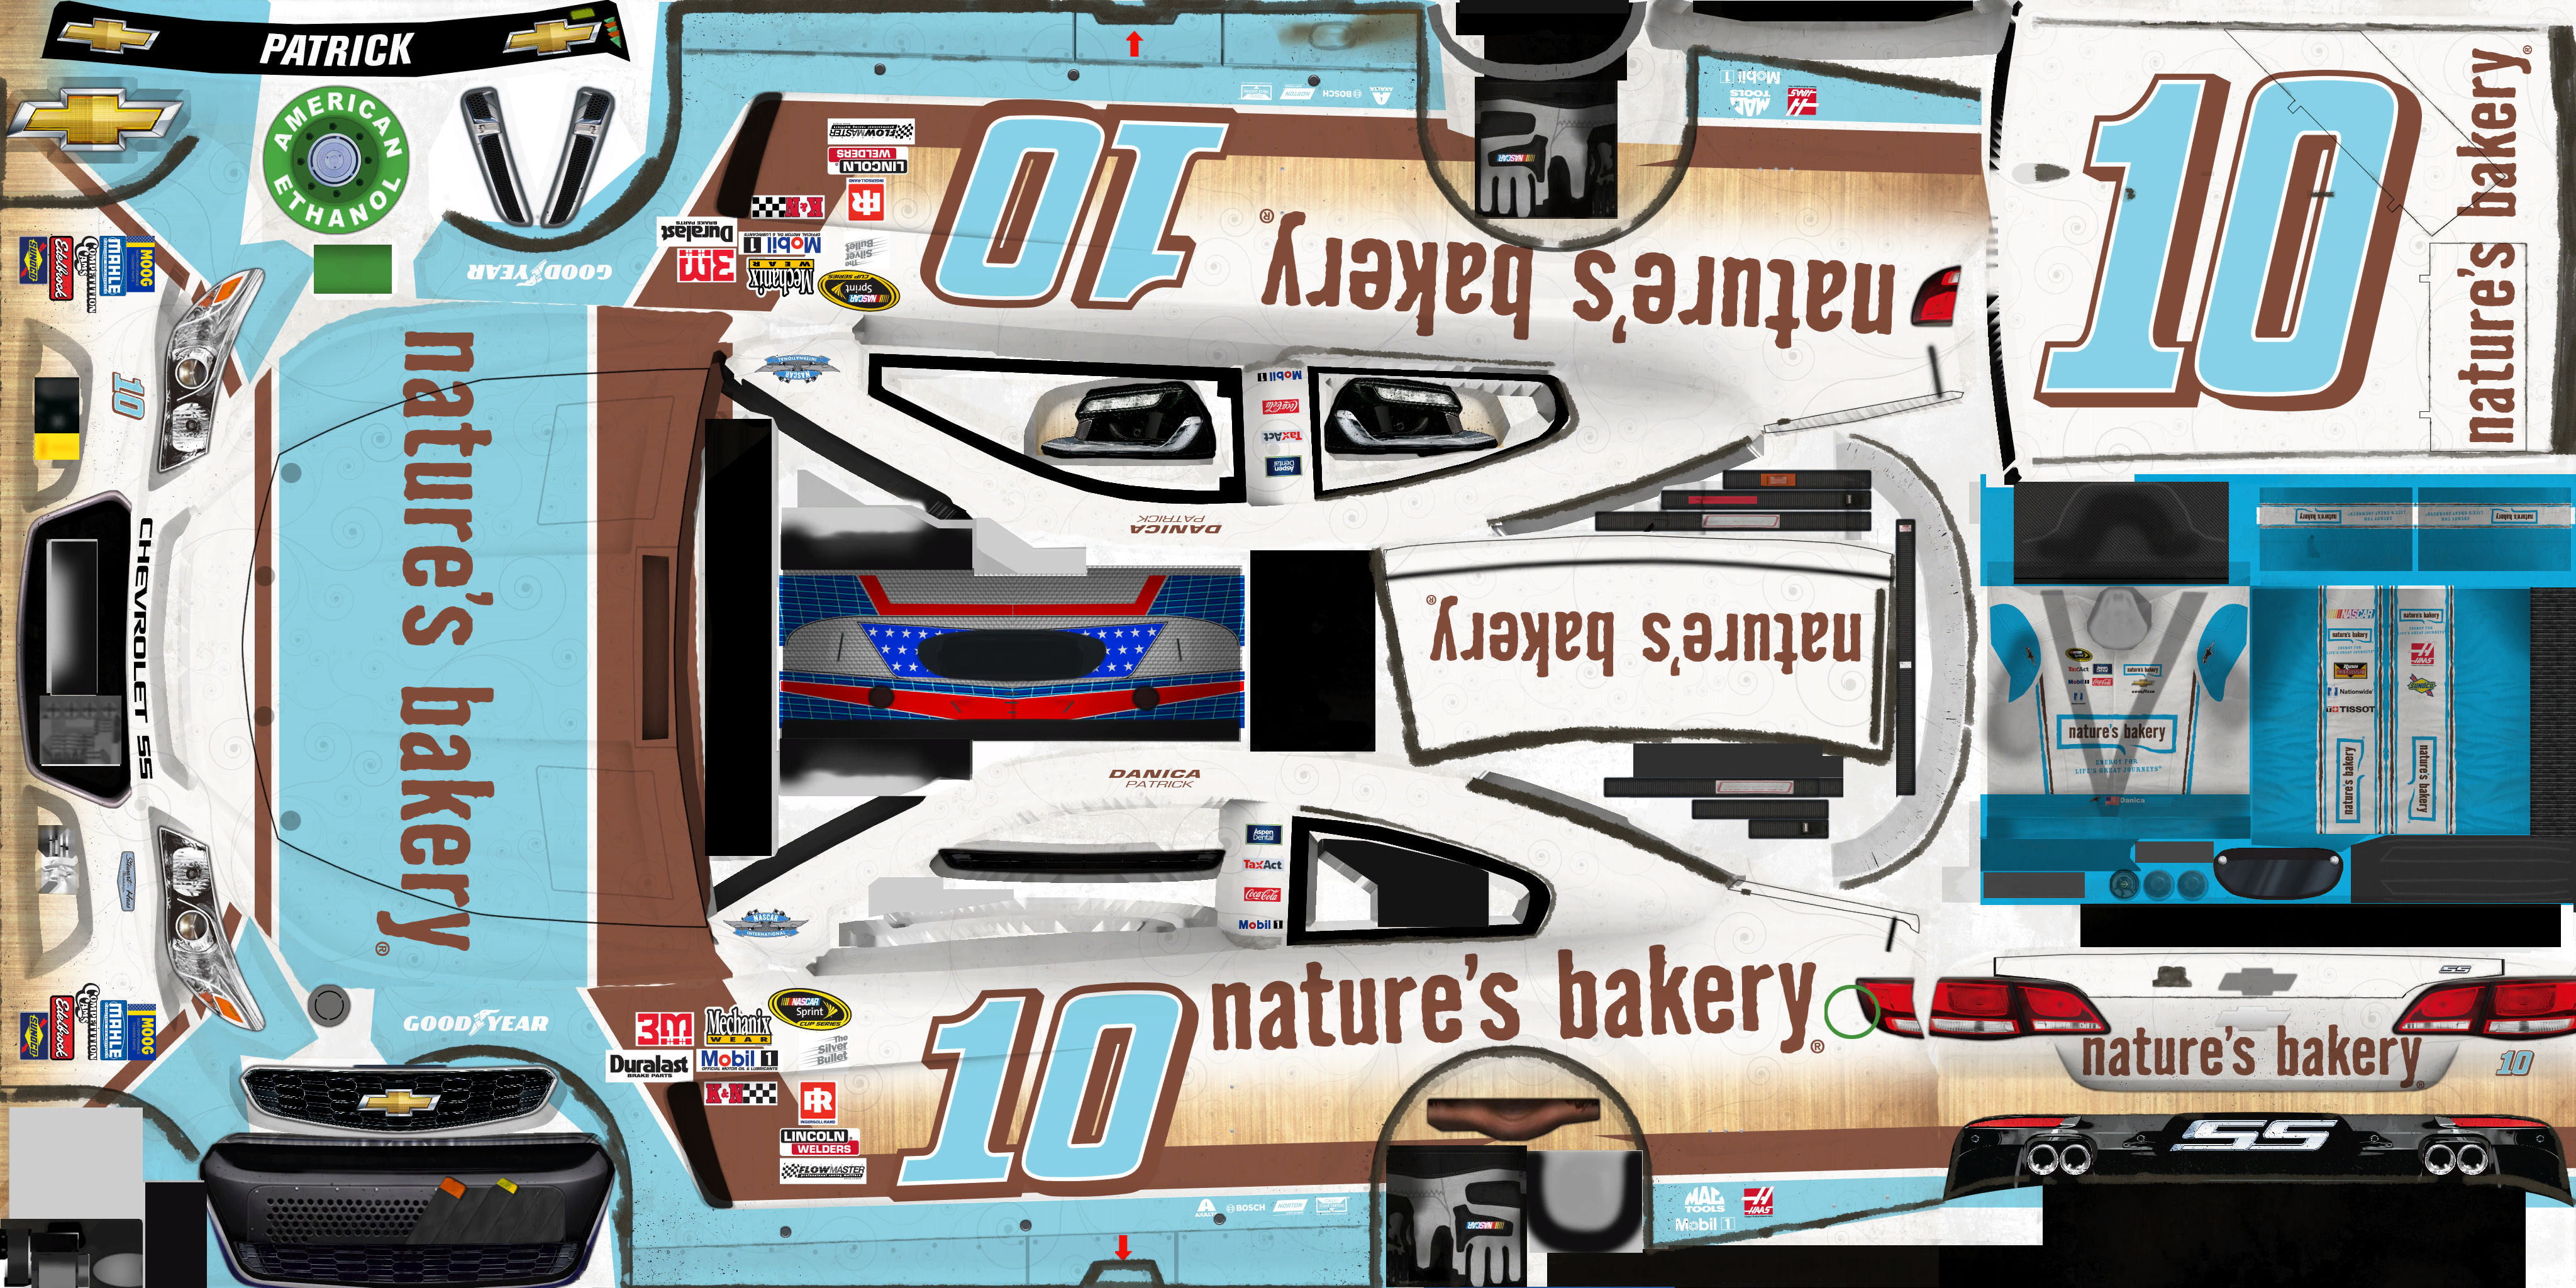 NASCAR Heat Evolution - #10 Danica Patrick (Nature's Bakery Throwback)